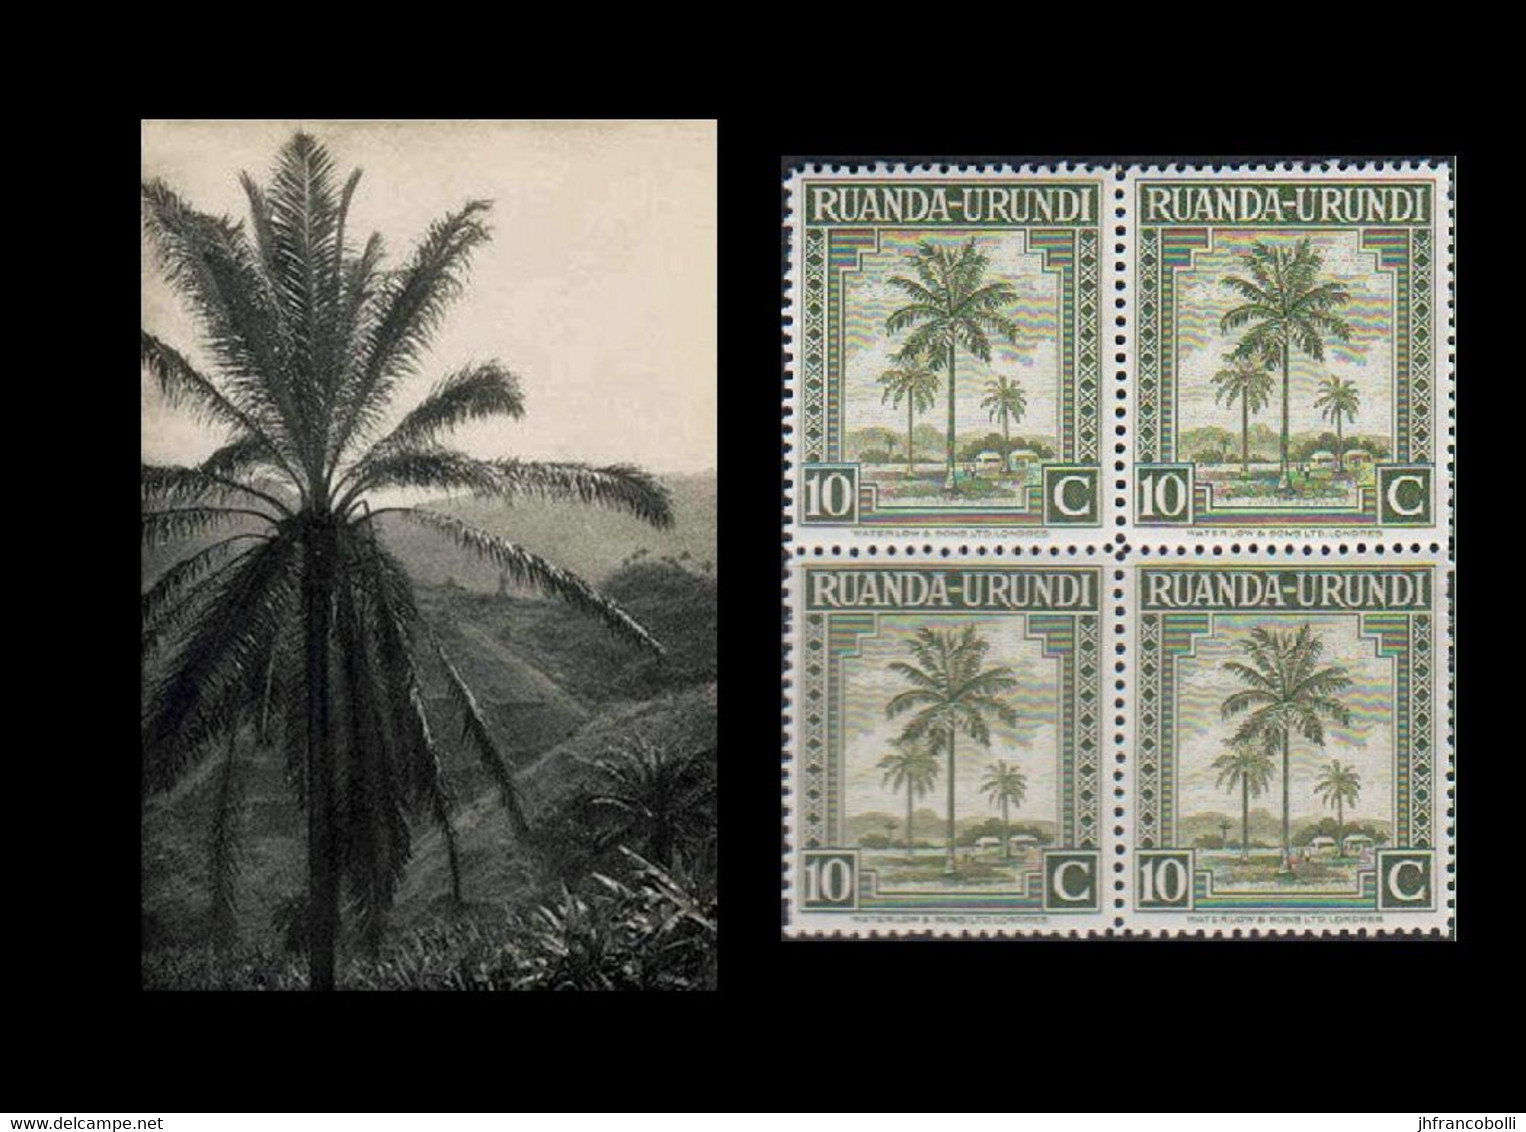 1942 ** RUANDA-URUNDI = RU 127 MNH OLIVE PALM TREES / PHOTO CARD [B] (12.8 X 9.3 Mm) WITH BLOCK OF 4 MNH STAMPS - Ruanda-Urundi